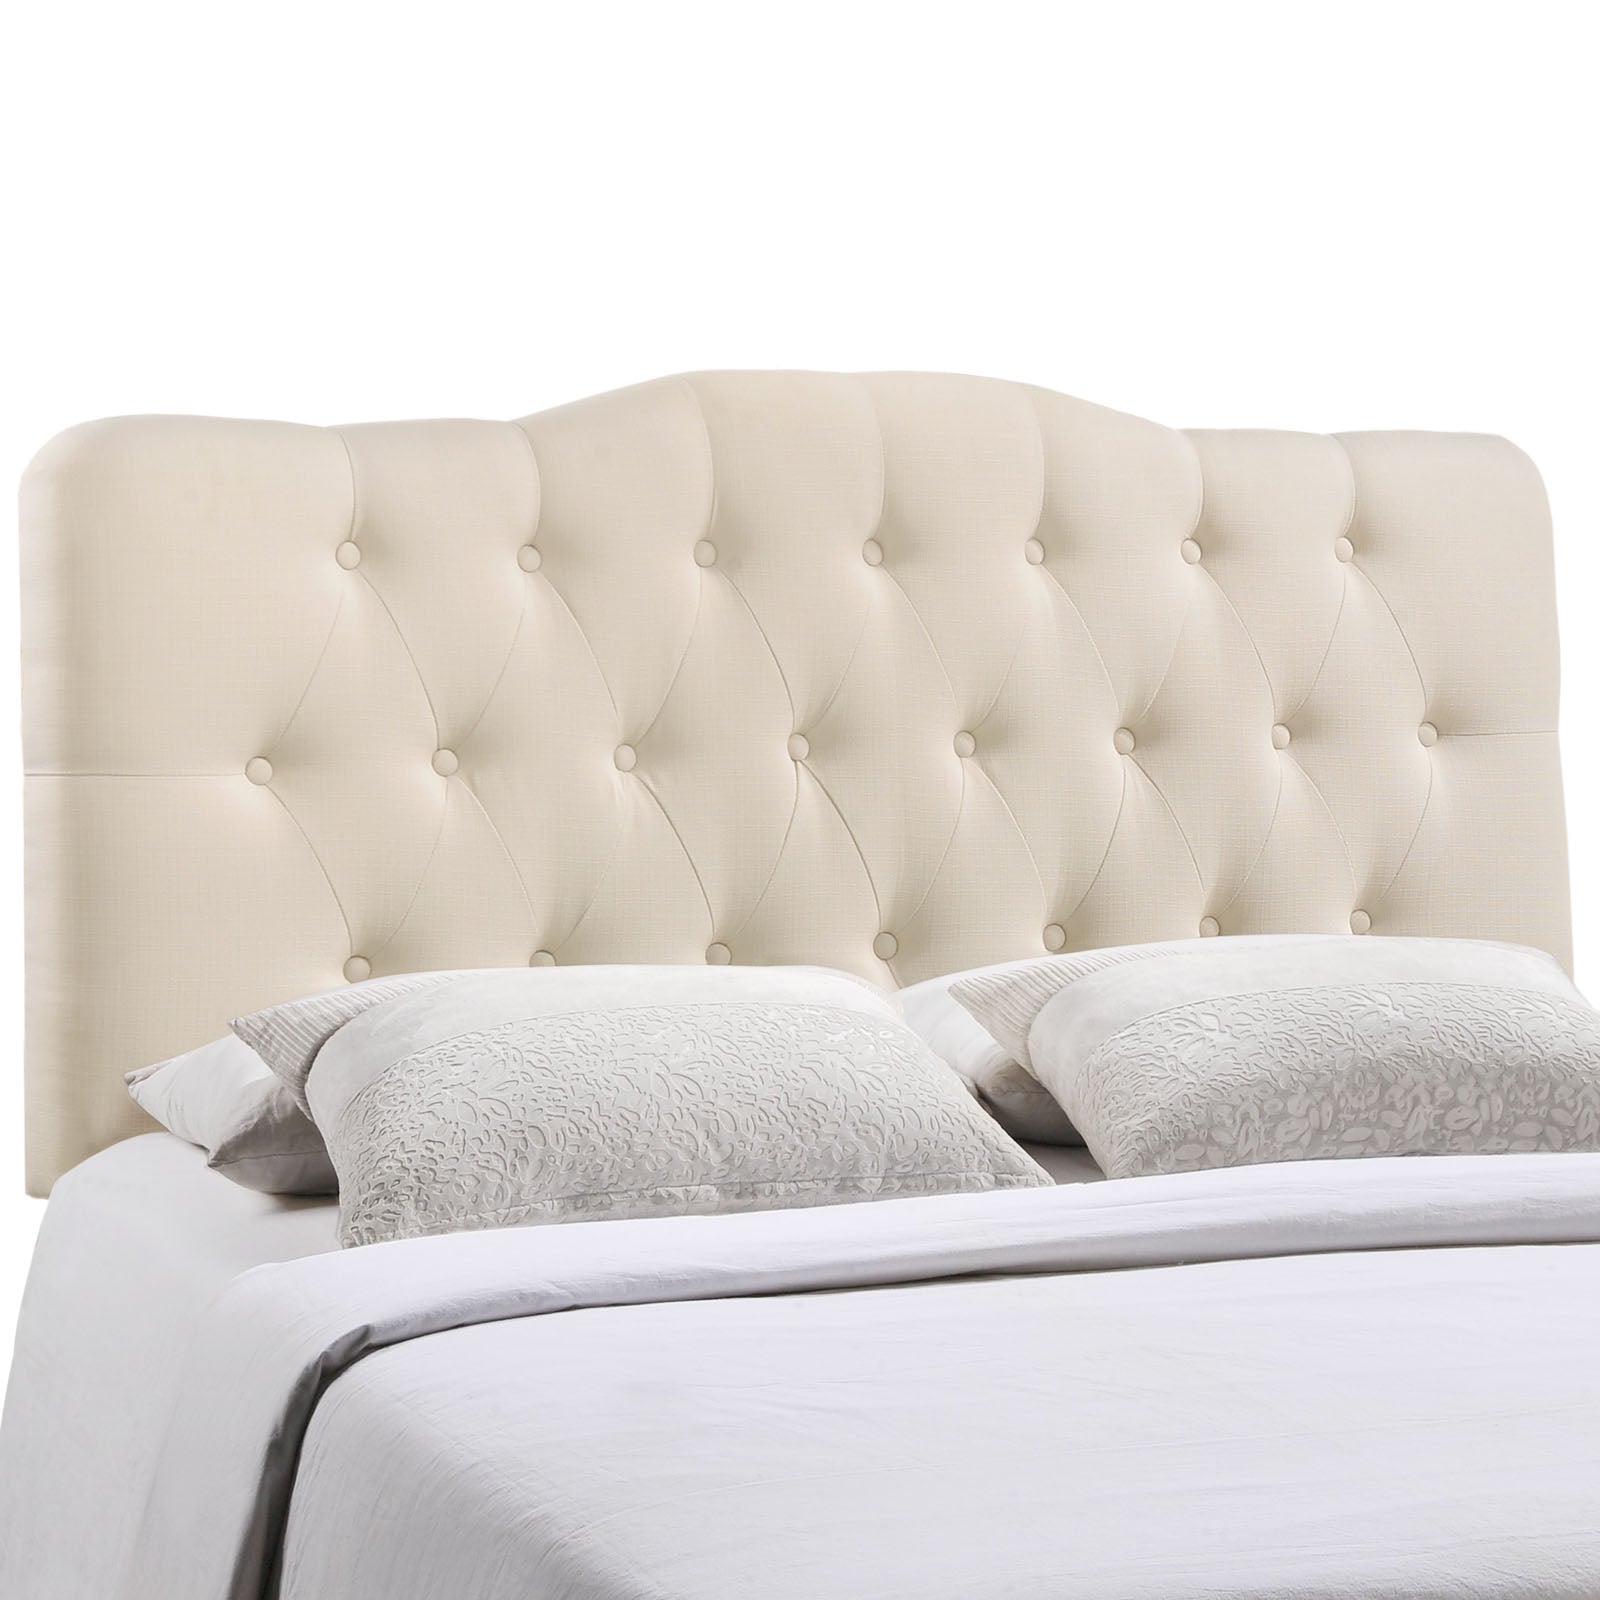 Annabel King Upholstered Fabric Headboard - East Shore Modern Home Furnishings